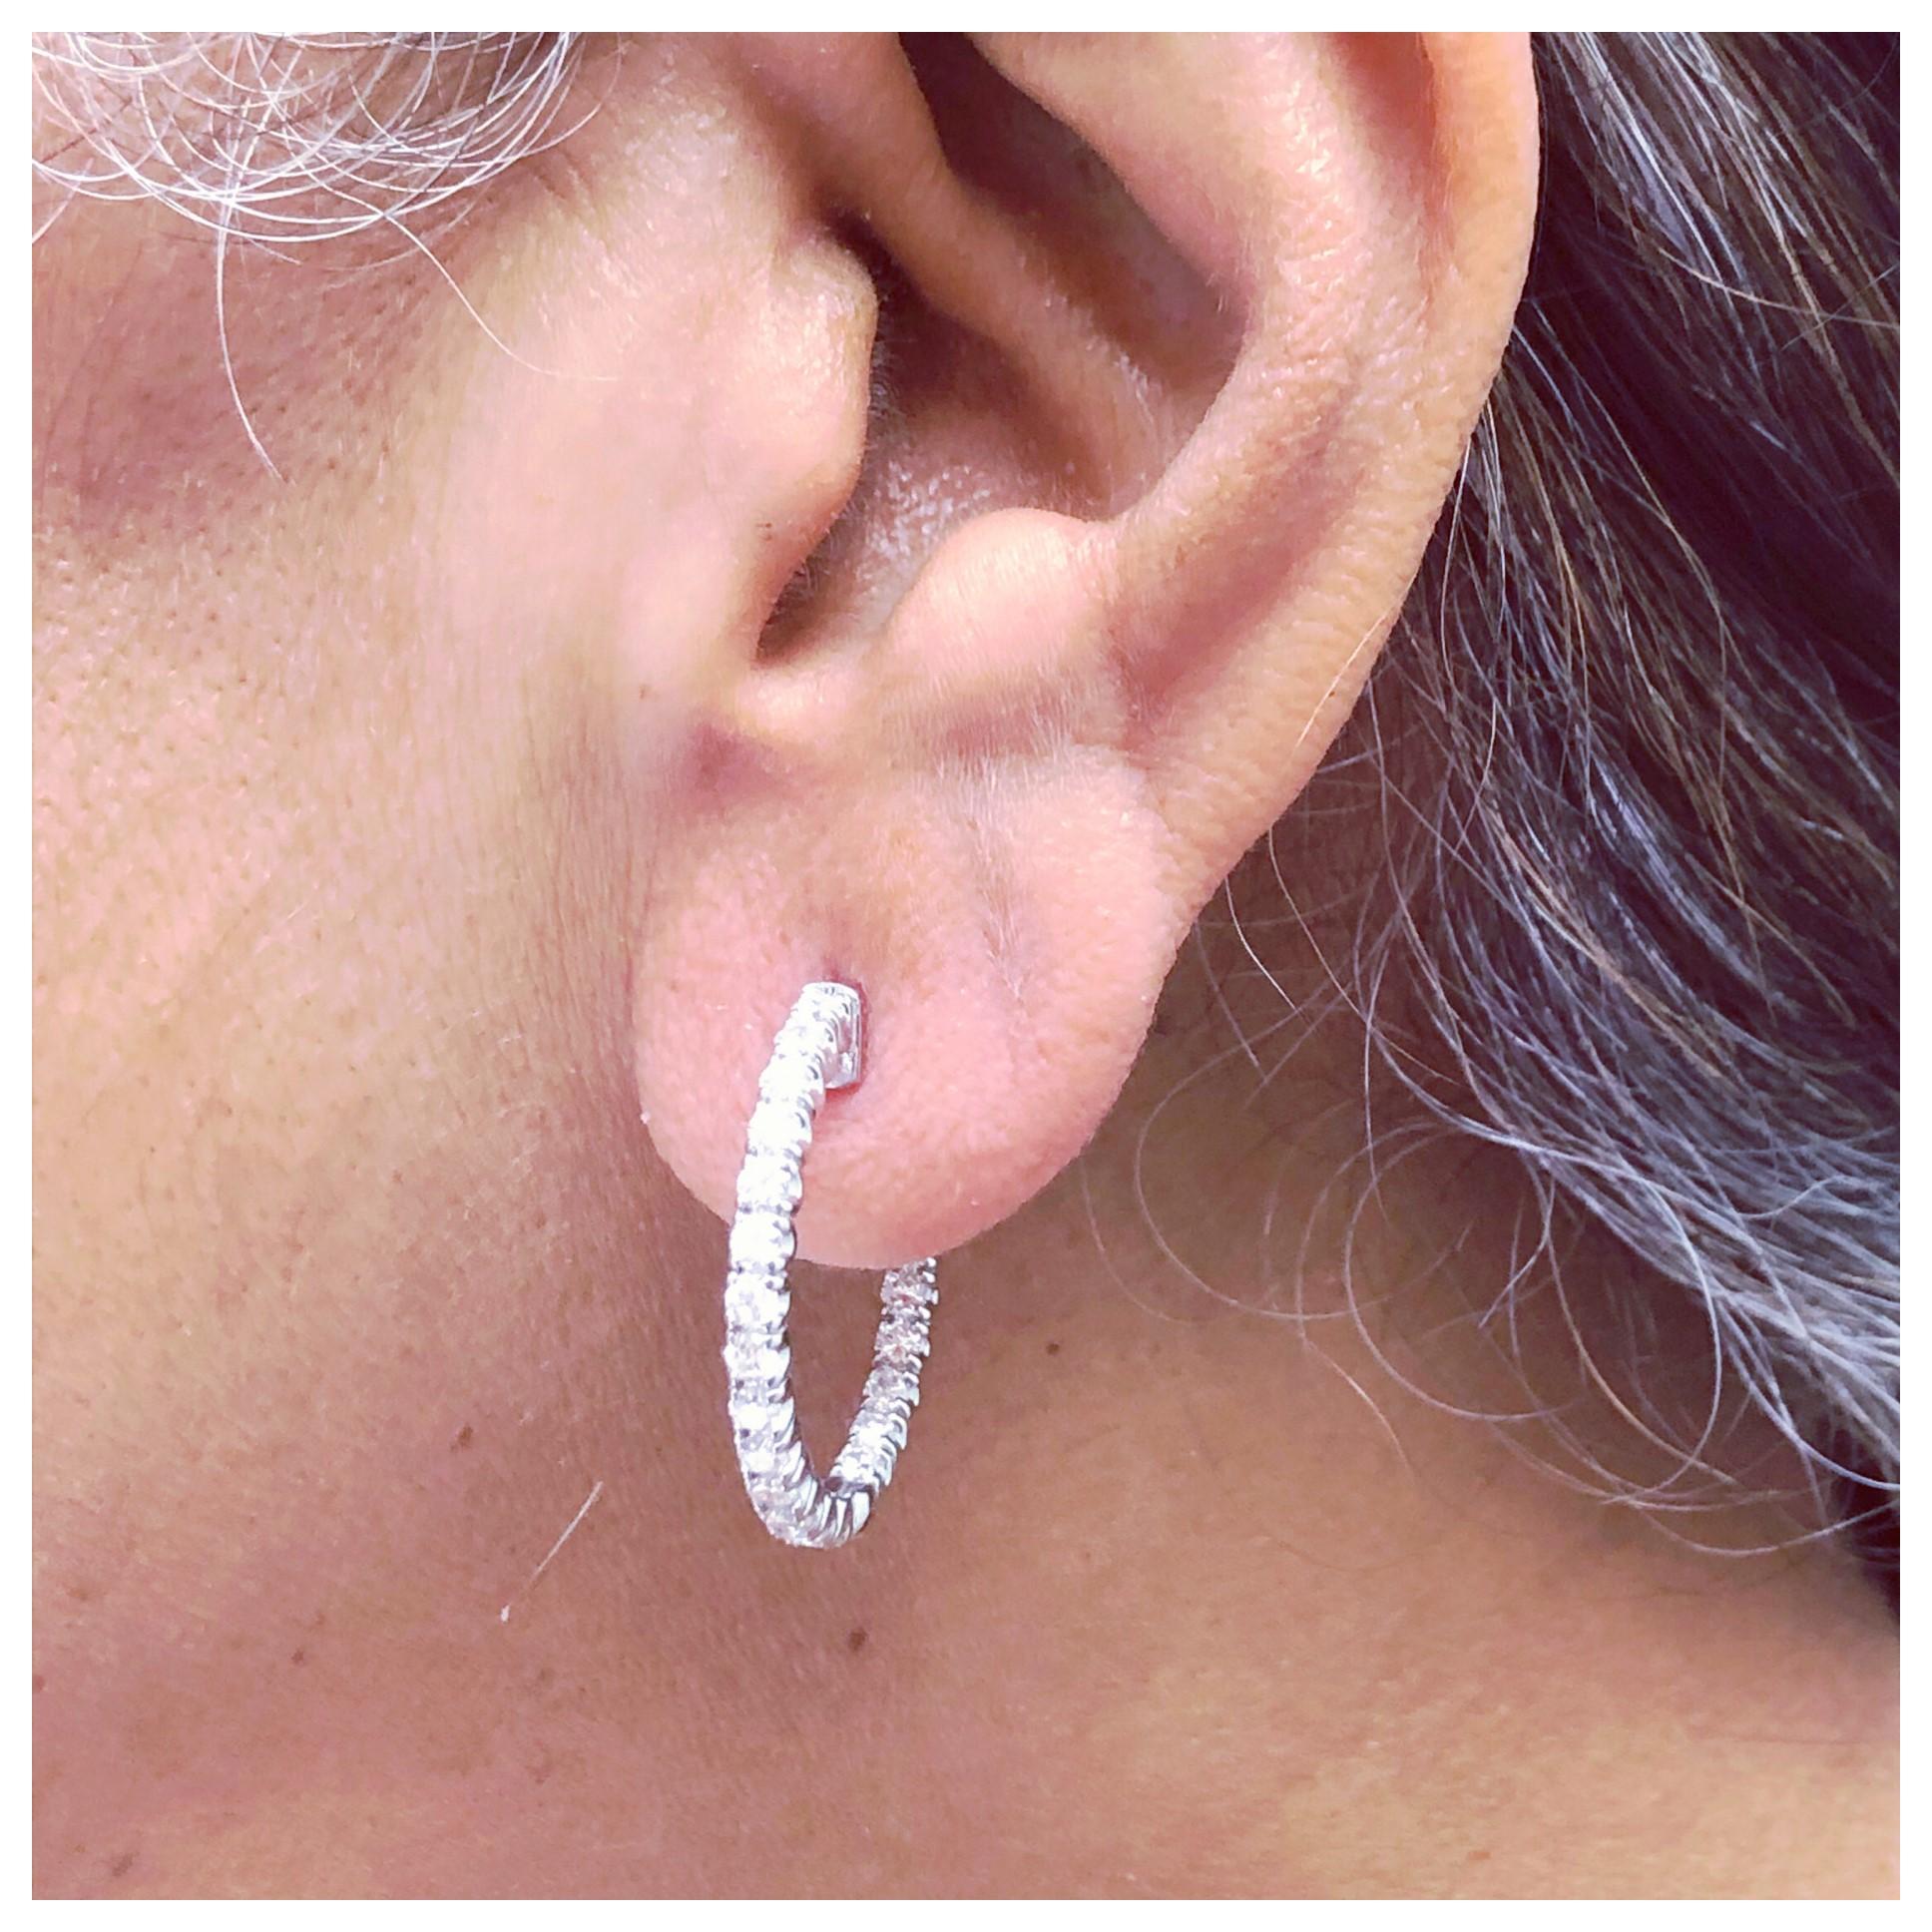 3 4 carat diamond earrings